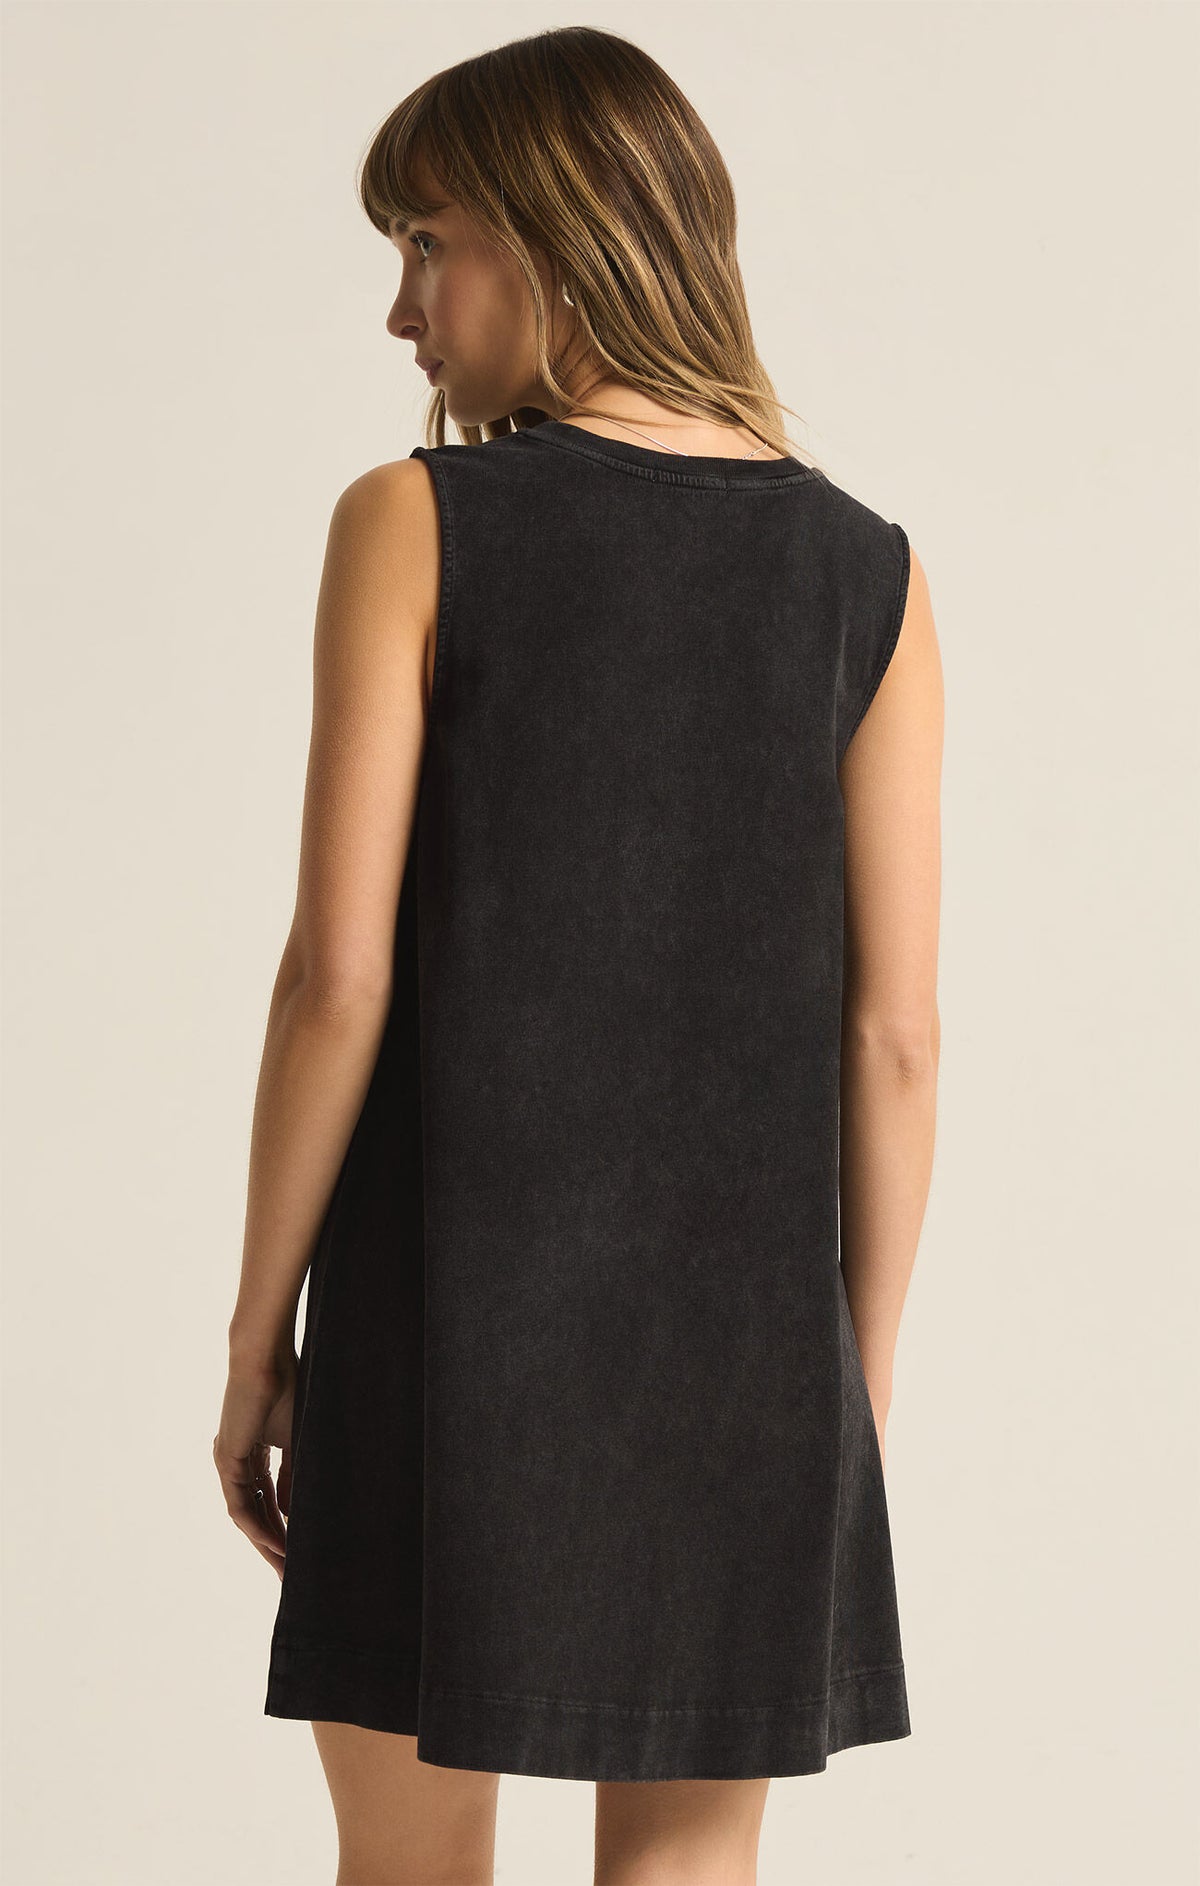 Sloane Dress in Black - junglefunkrecordings